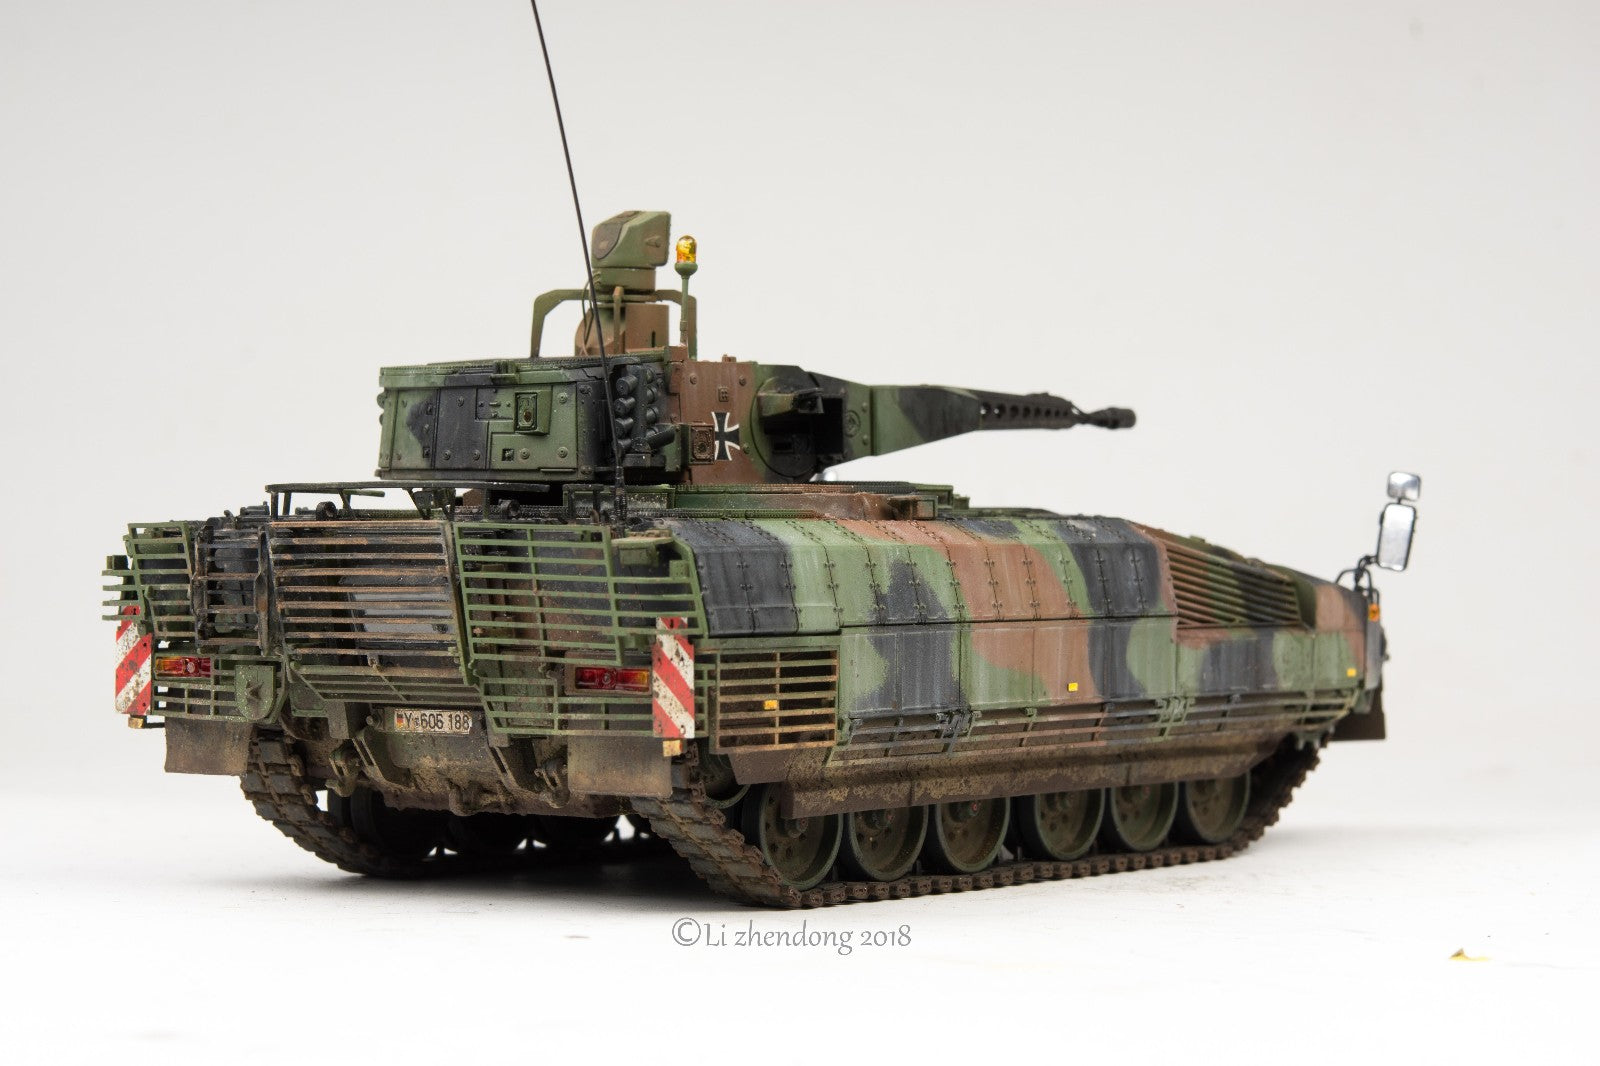 RM5021 - German Schutzenpanzer "Puma" Infantry Fighting Vehicle w/Workable Track Links